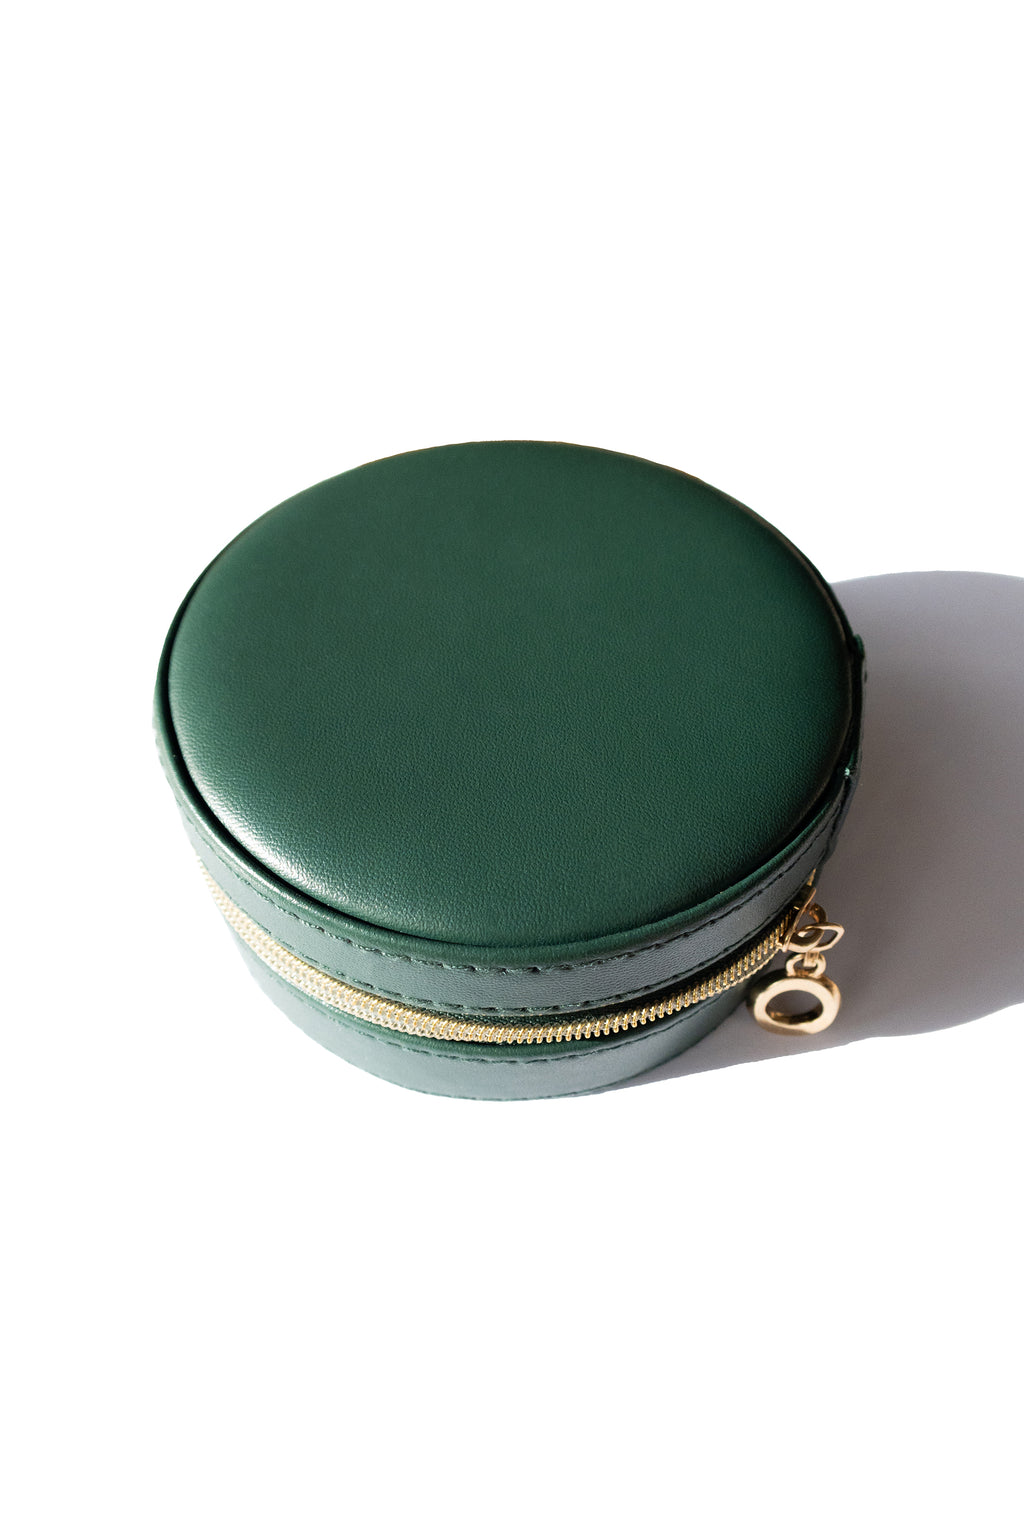 seree-green-vegan-leather-round-jewelry-box-travel